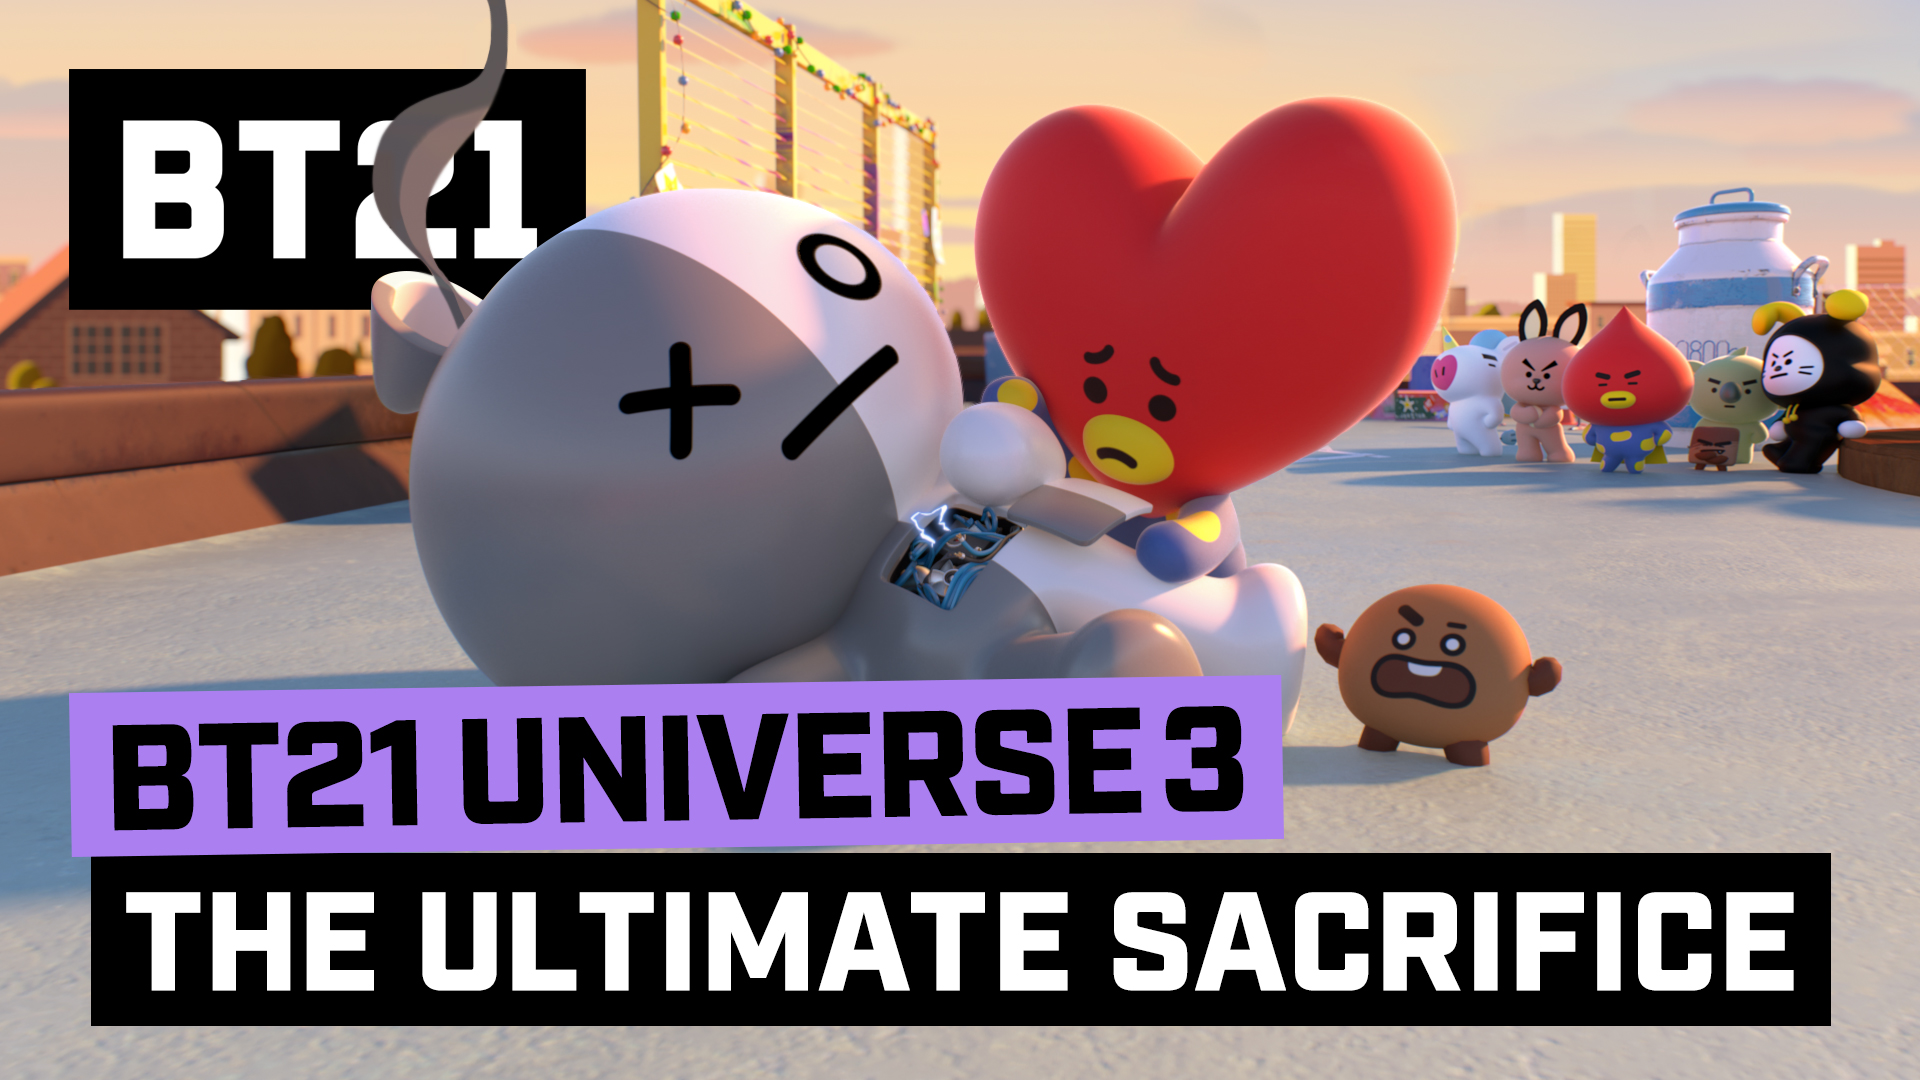 BT21 UNIVERSE 3 ANIMATION EP.07 - The Ultimate Sacrifice